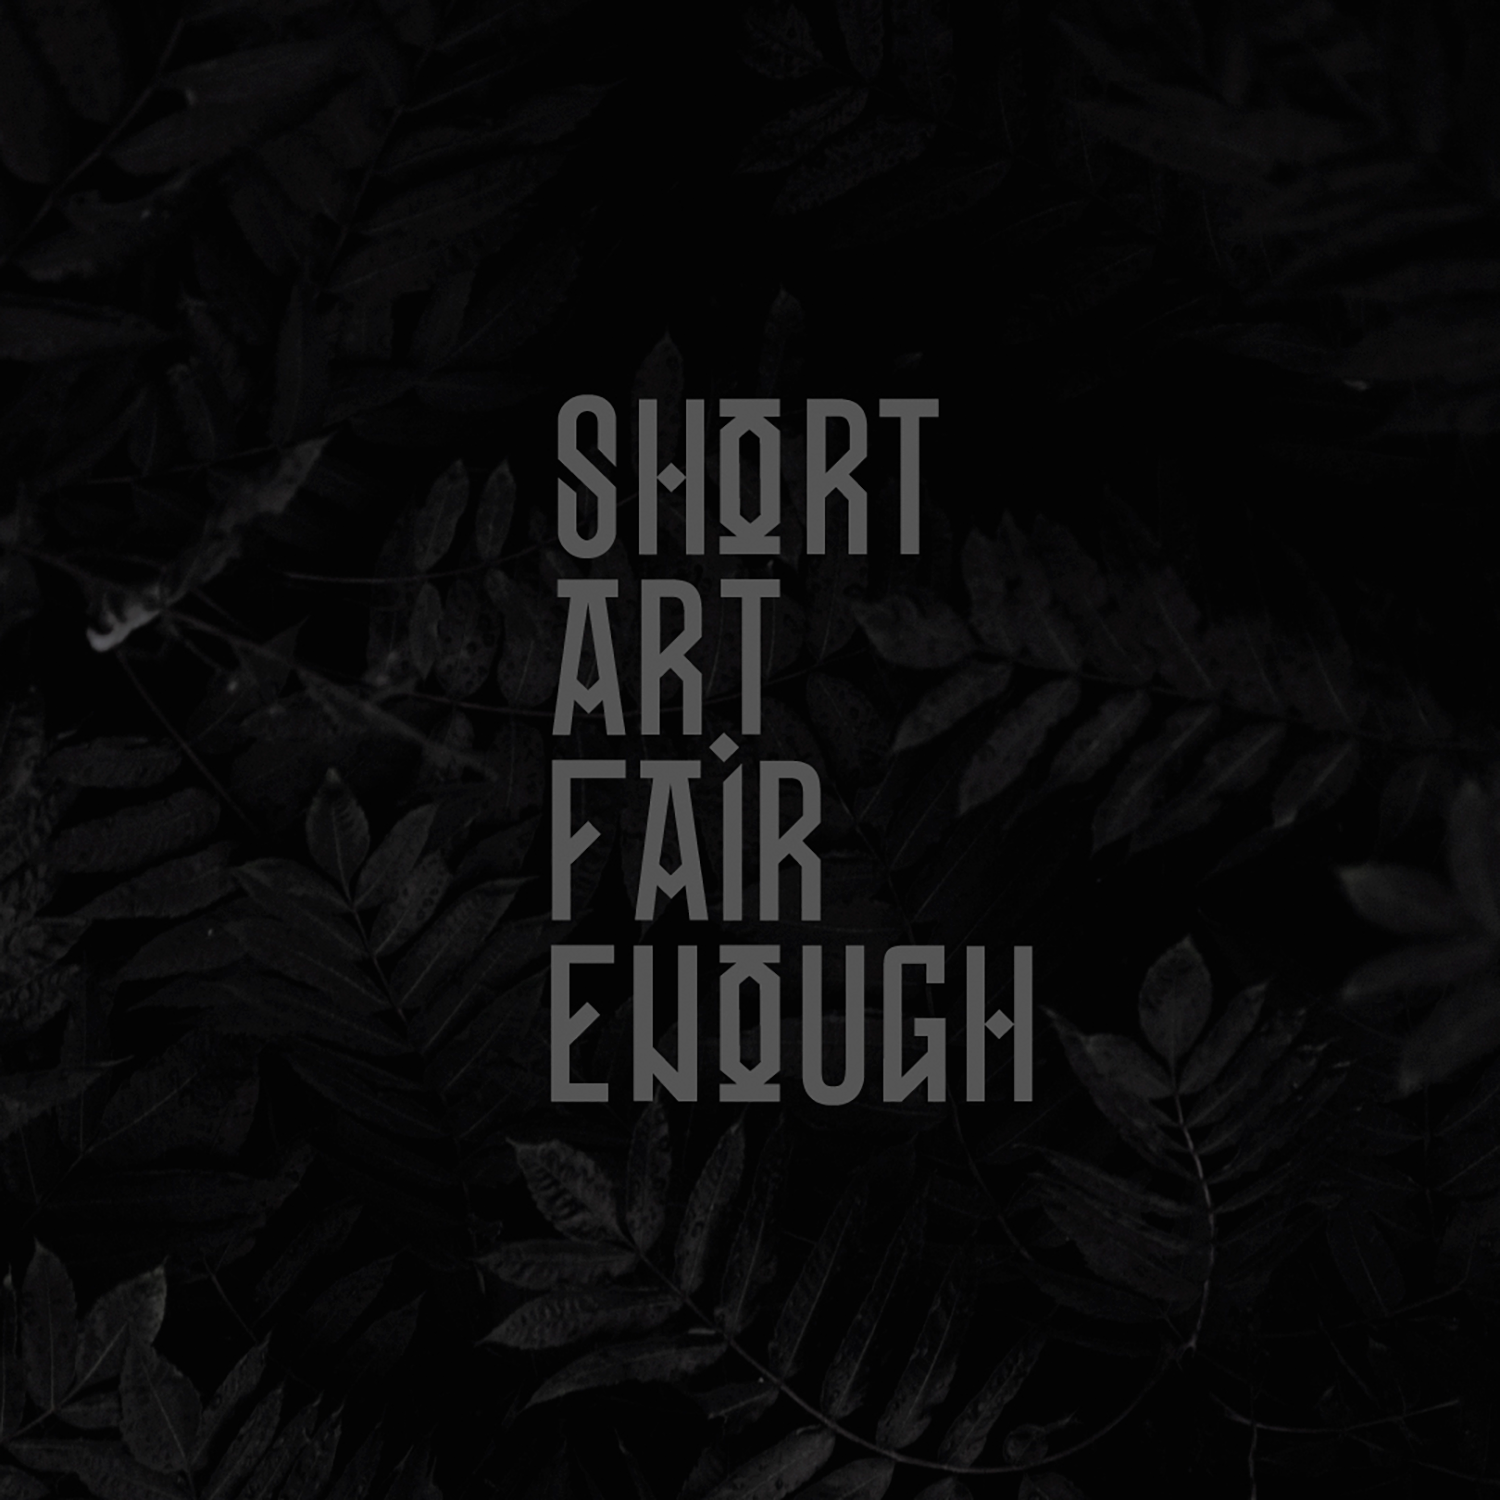 Short Art Fair Enough logo